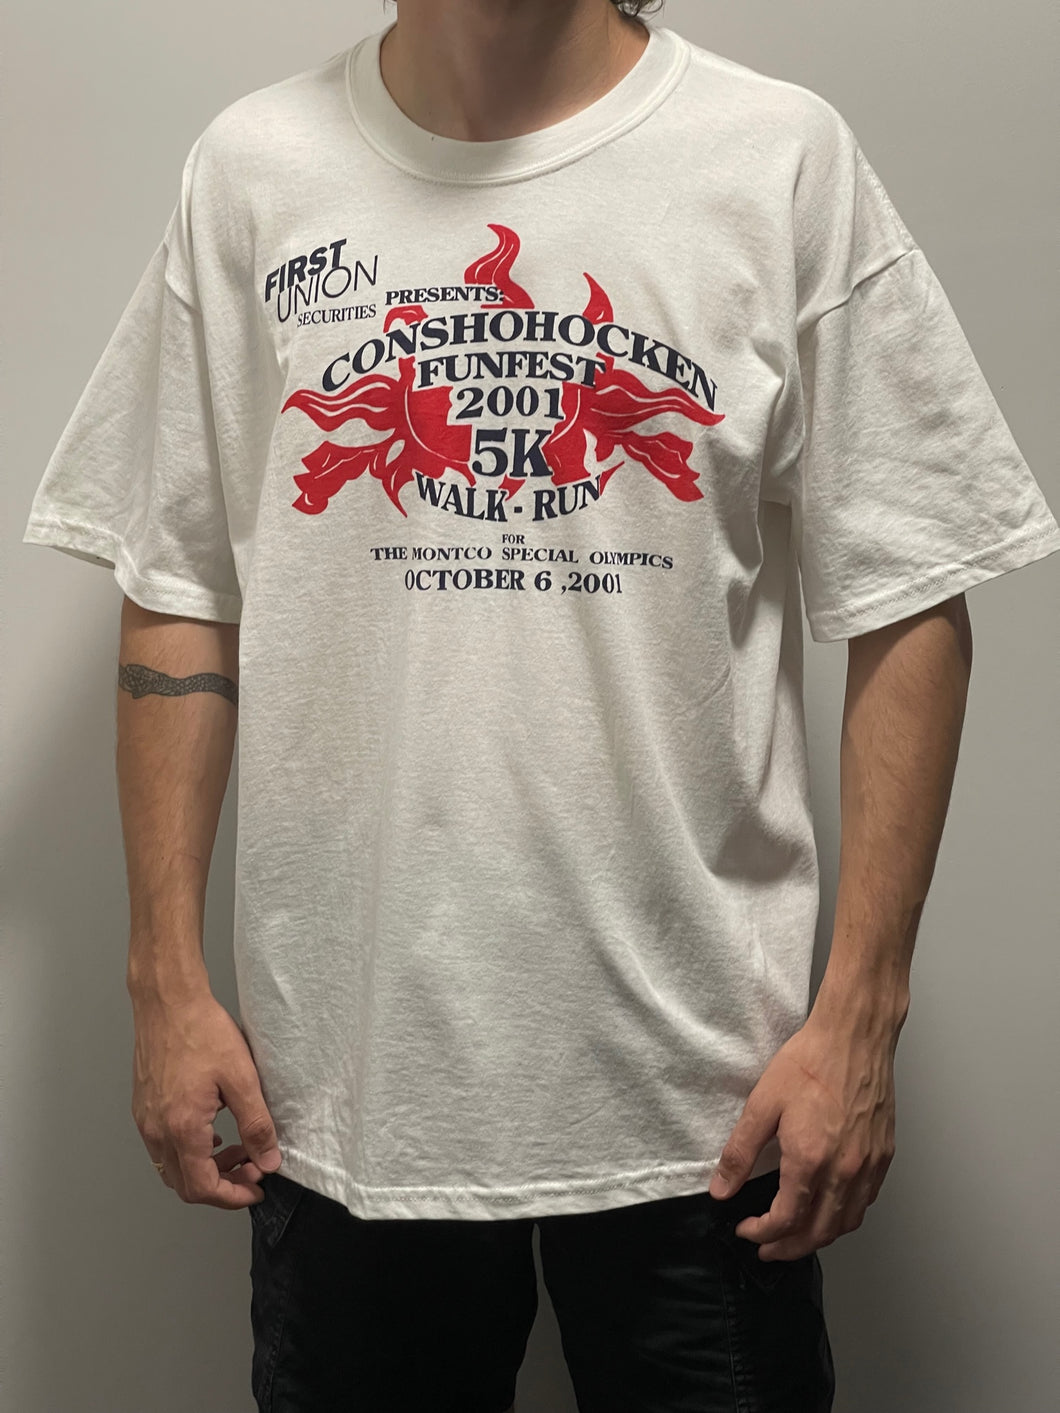 2001 Conshohocken Funfest White T-Shirt (XL)